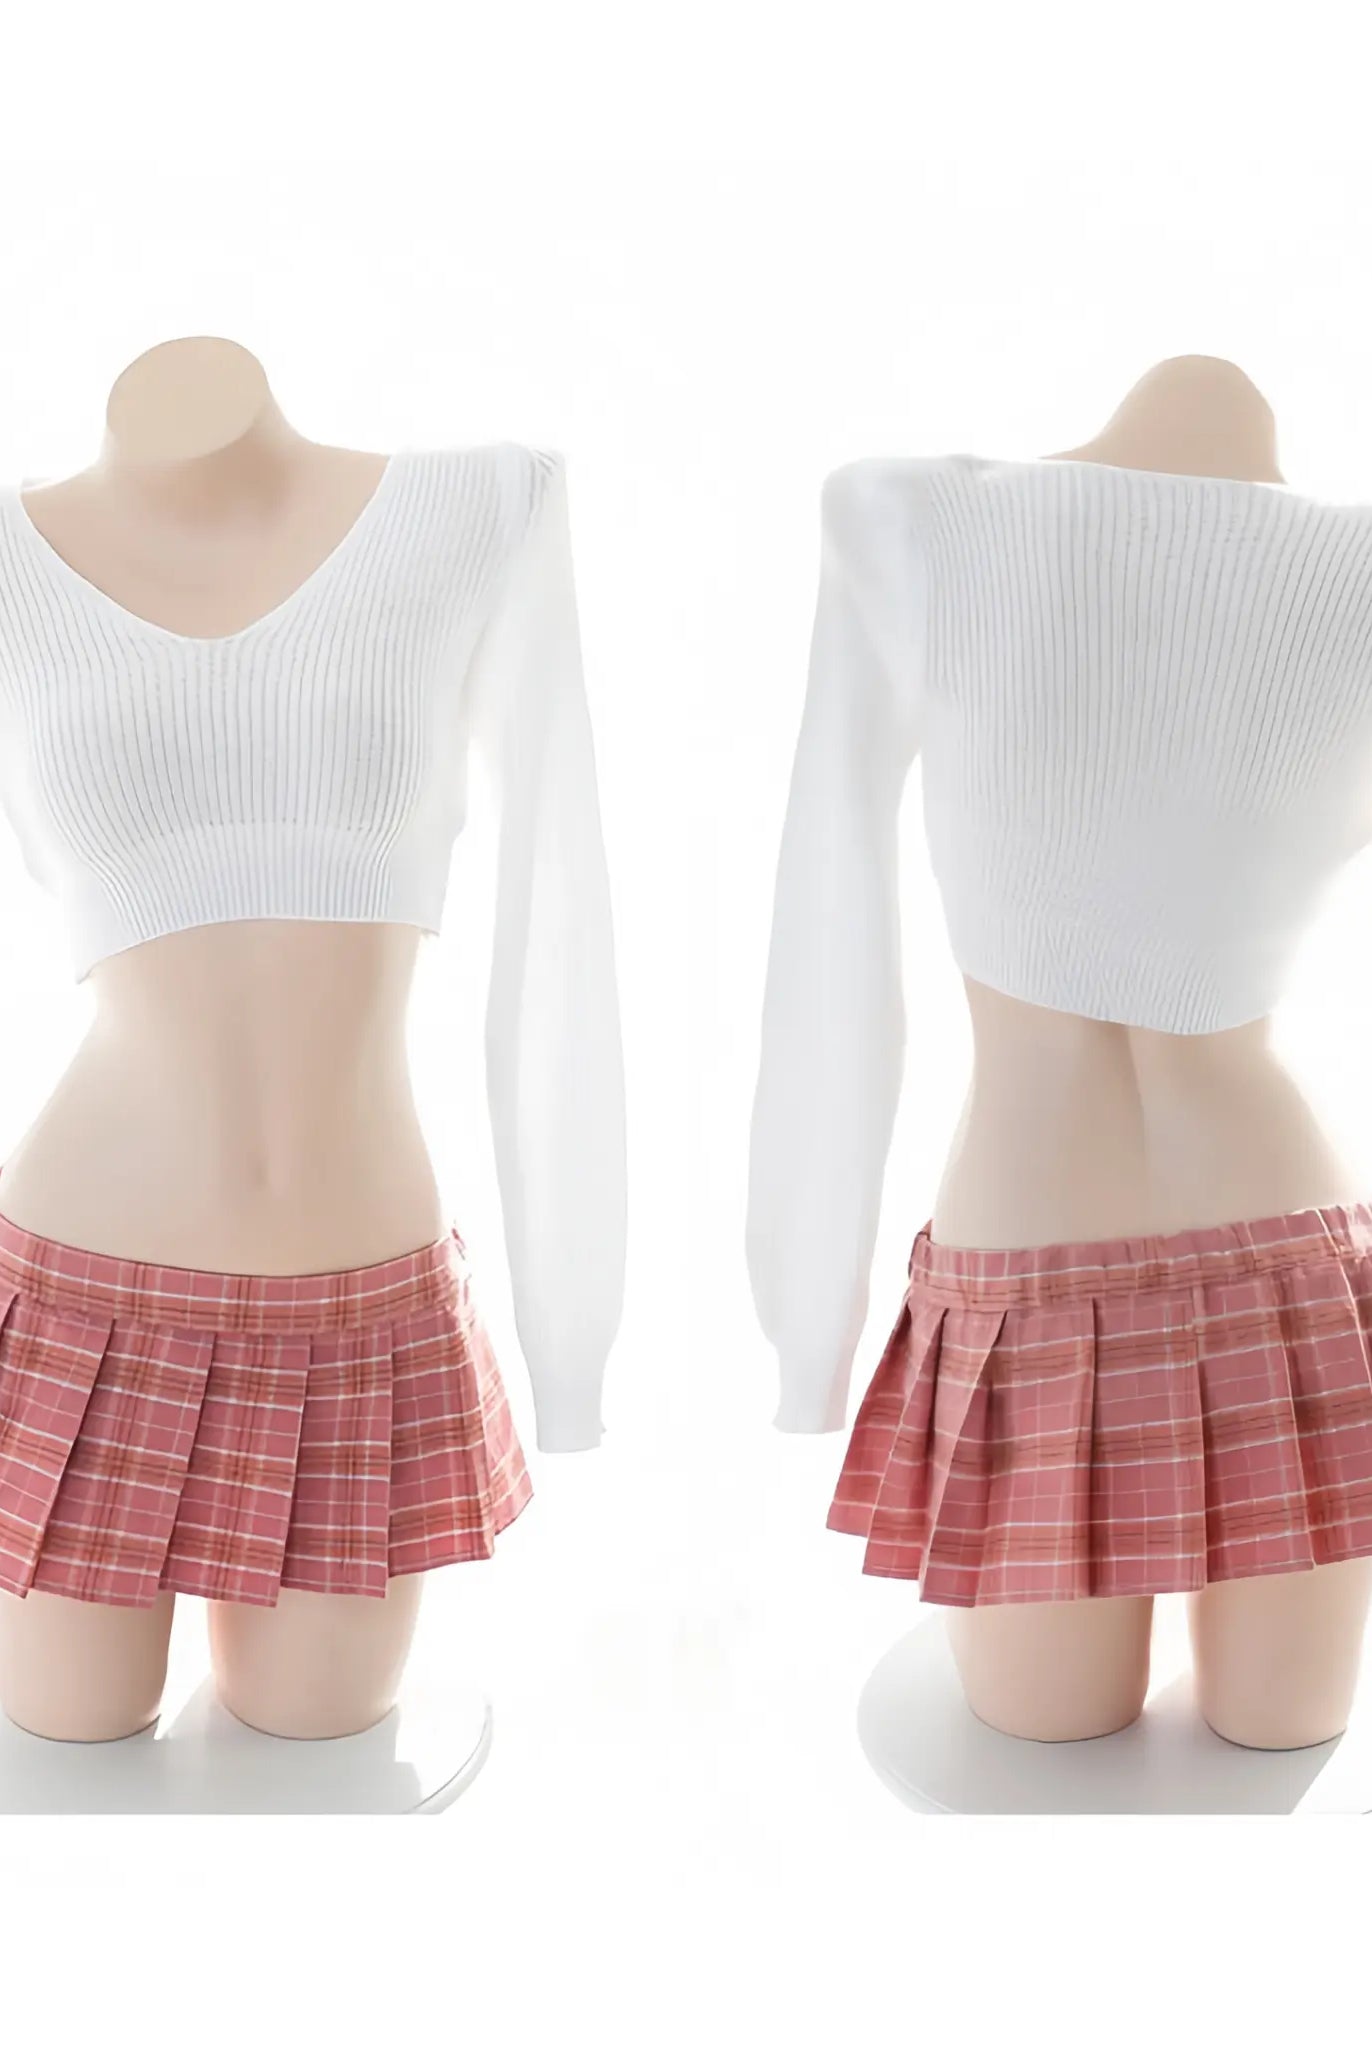 Cute Schoolgirl JK Sweater Uniform Sheer Lingerie Peach Passion